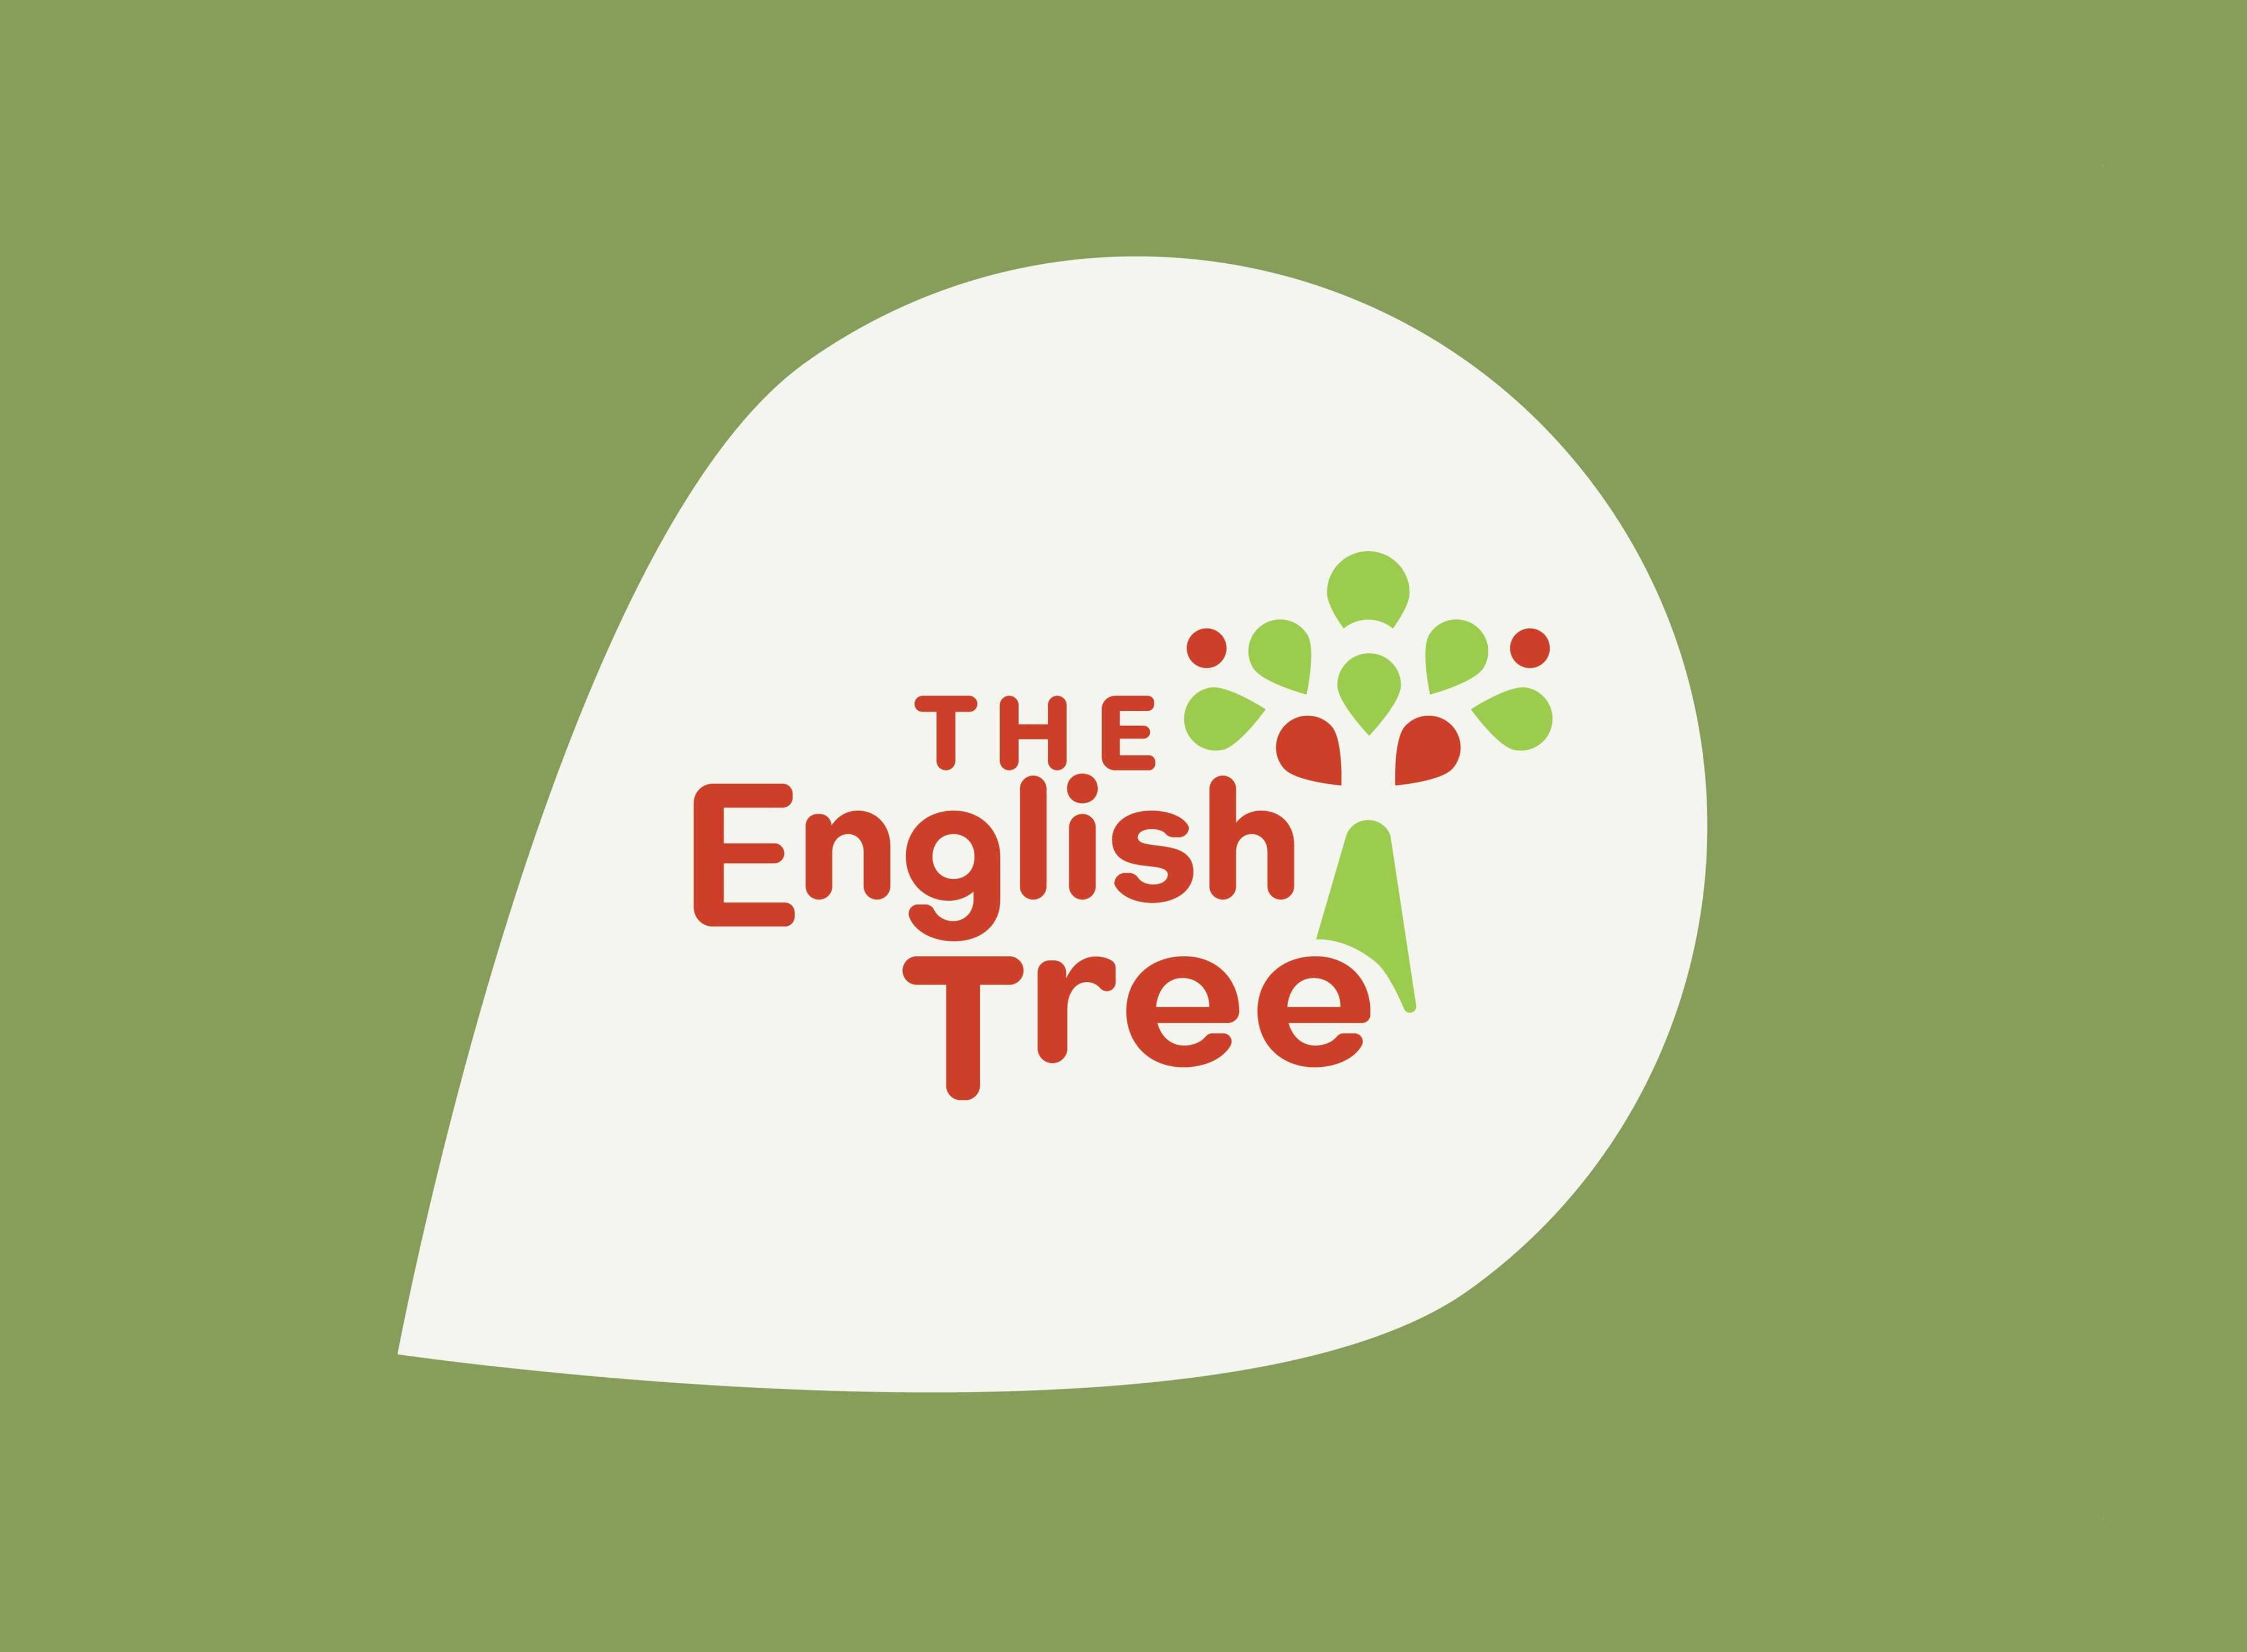 THIẾT KẾ LOGO GIÁO DỤC THE ENGLISH TREE